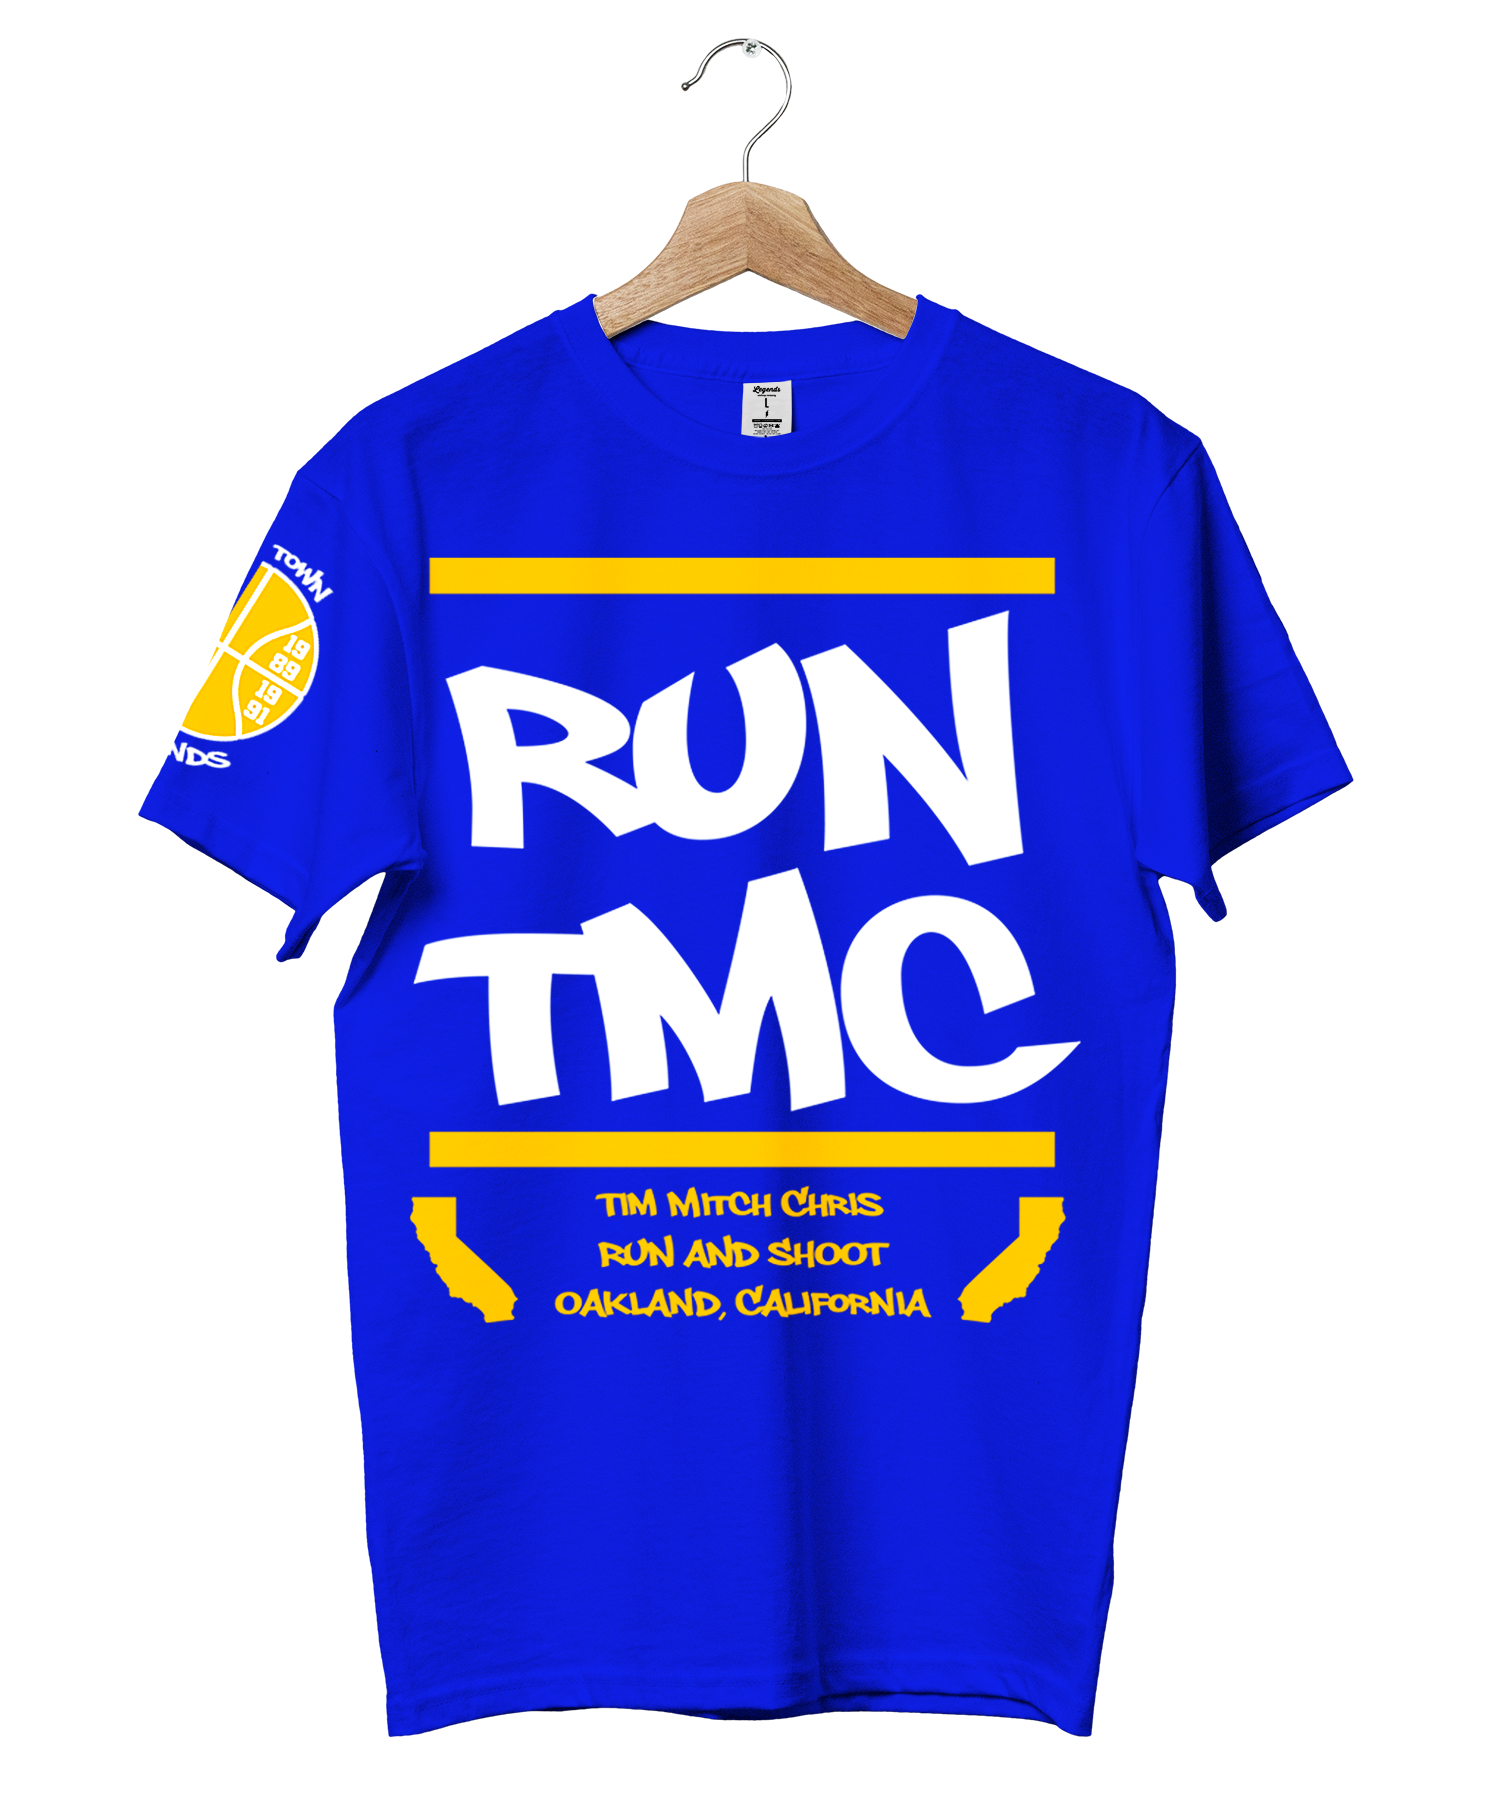 RUN TMC T-Shirt